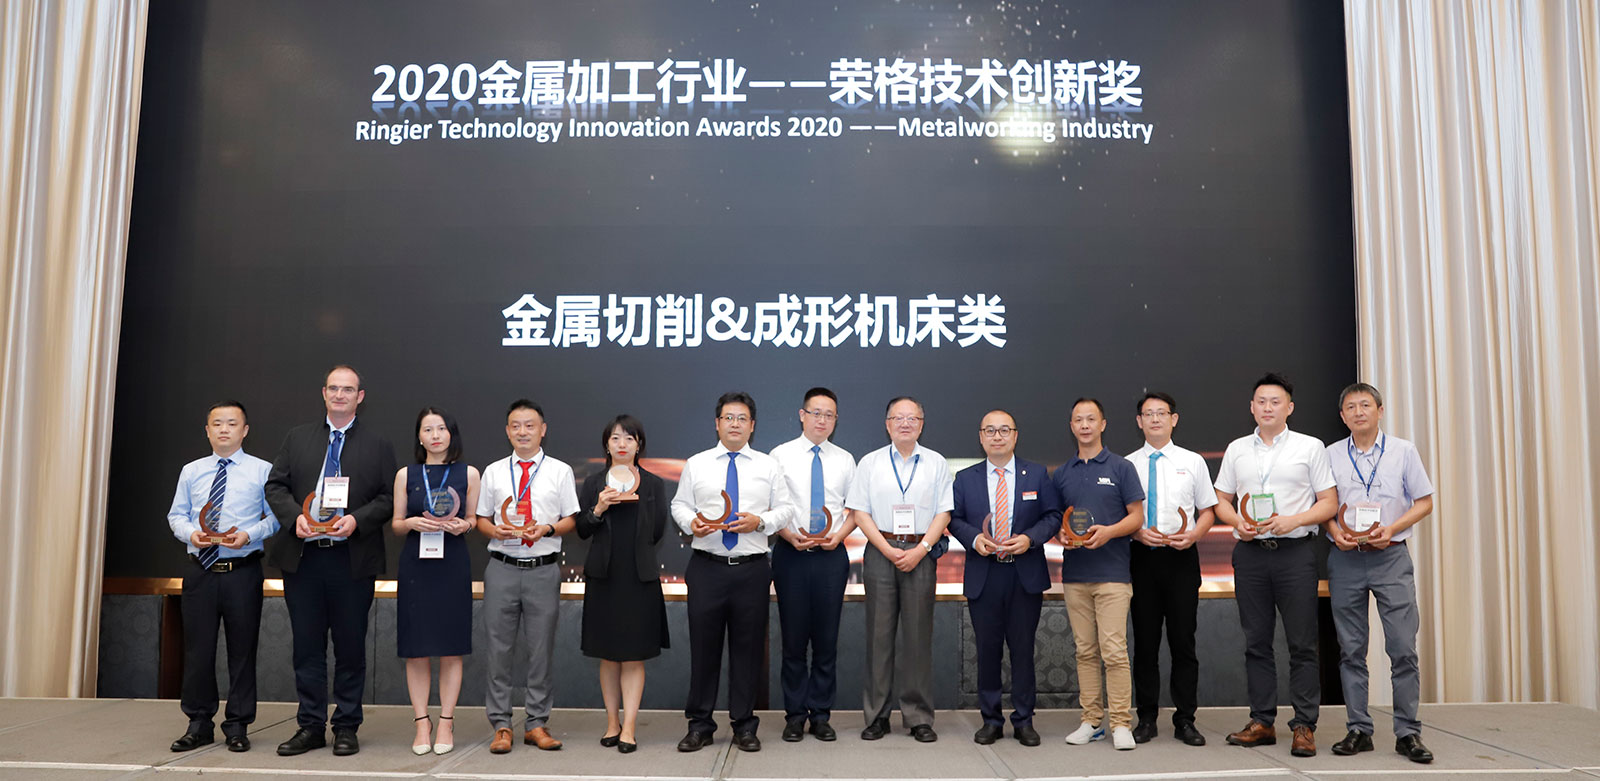 Soraluce galardonado con el premio Ringier Technology Innovation Award 2020